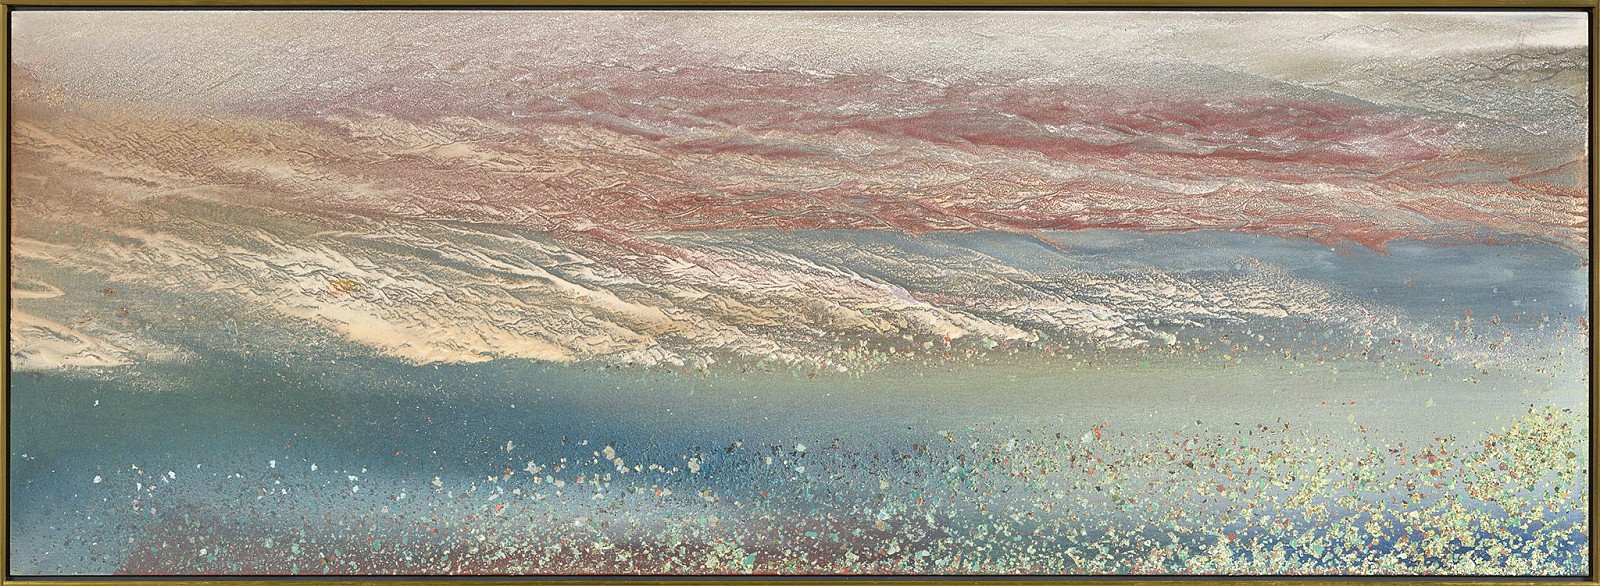 Paul Jenkins, Phenomena: Gobi Trade Winds, 1976
Acrylic on linen, 27 1/2 x 77 in. (69.8 x 195.6 cm)
JEN-00033